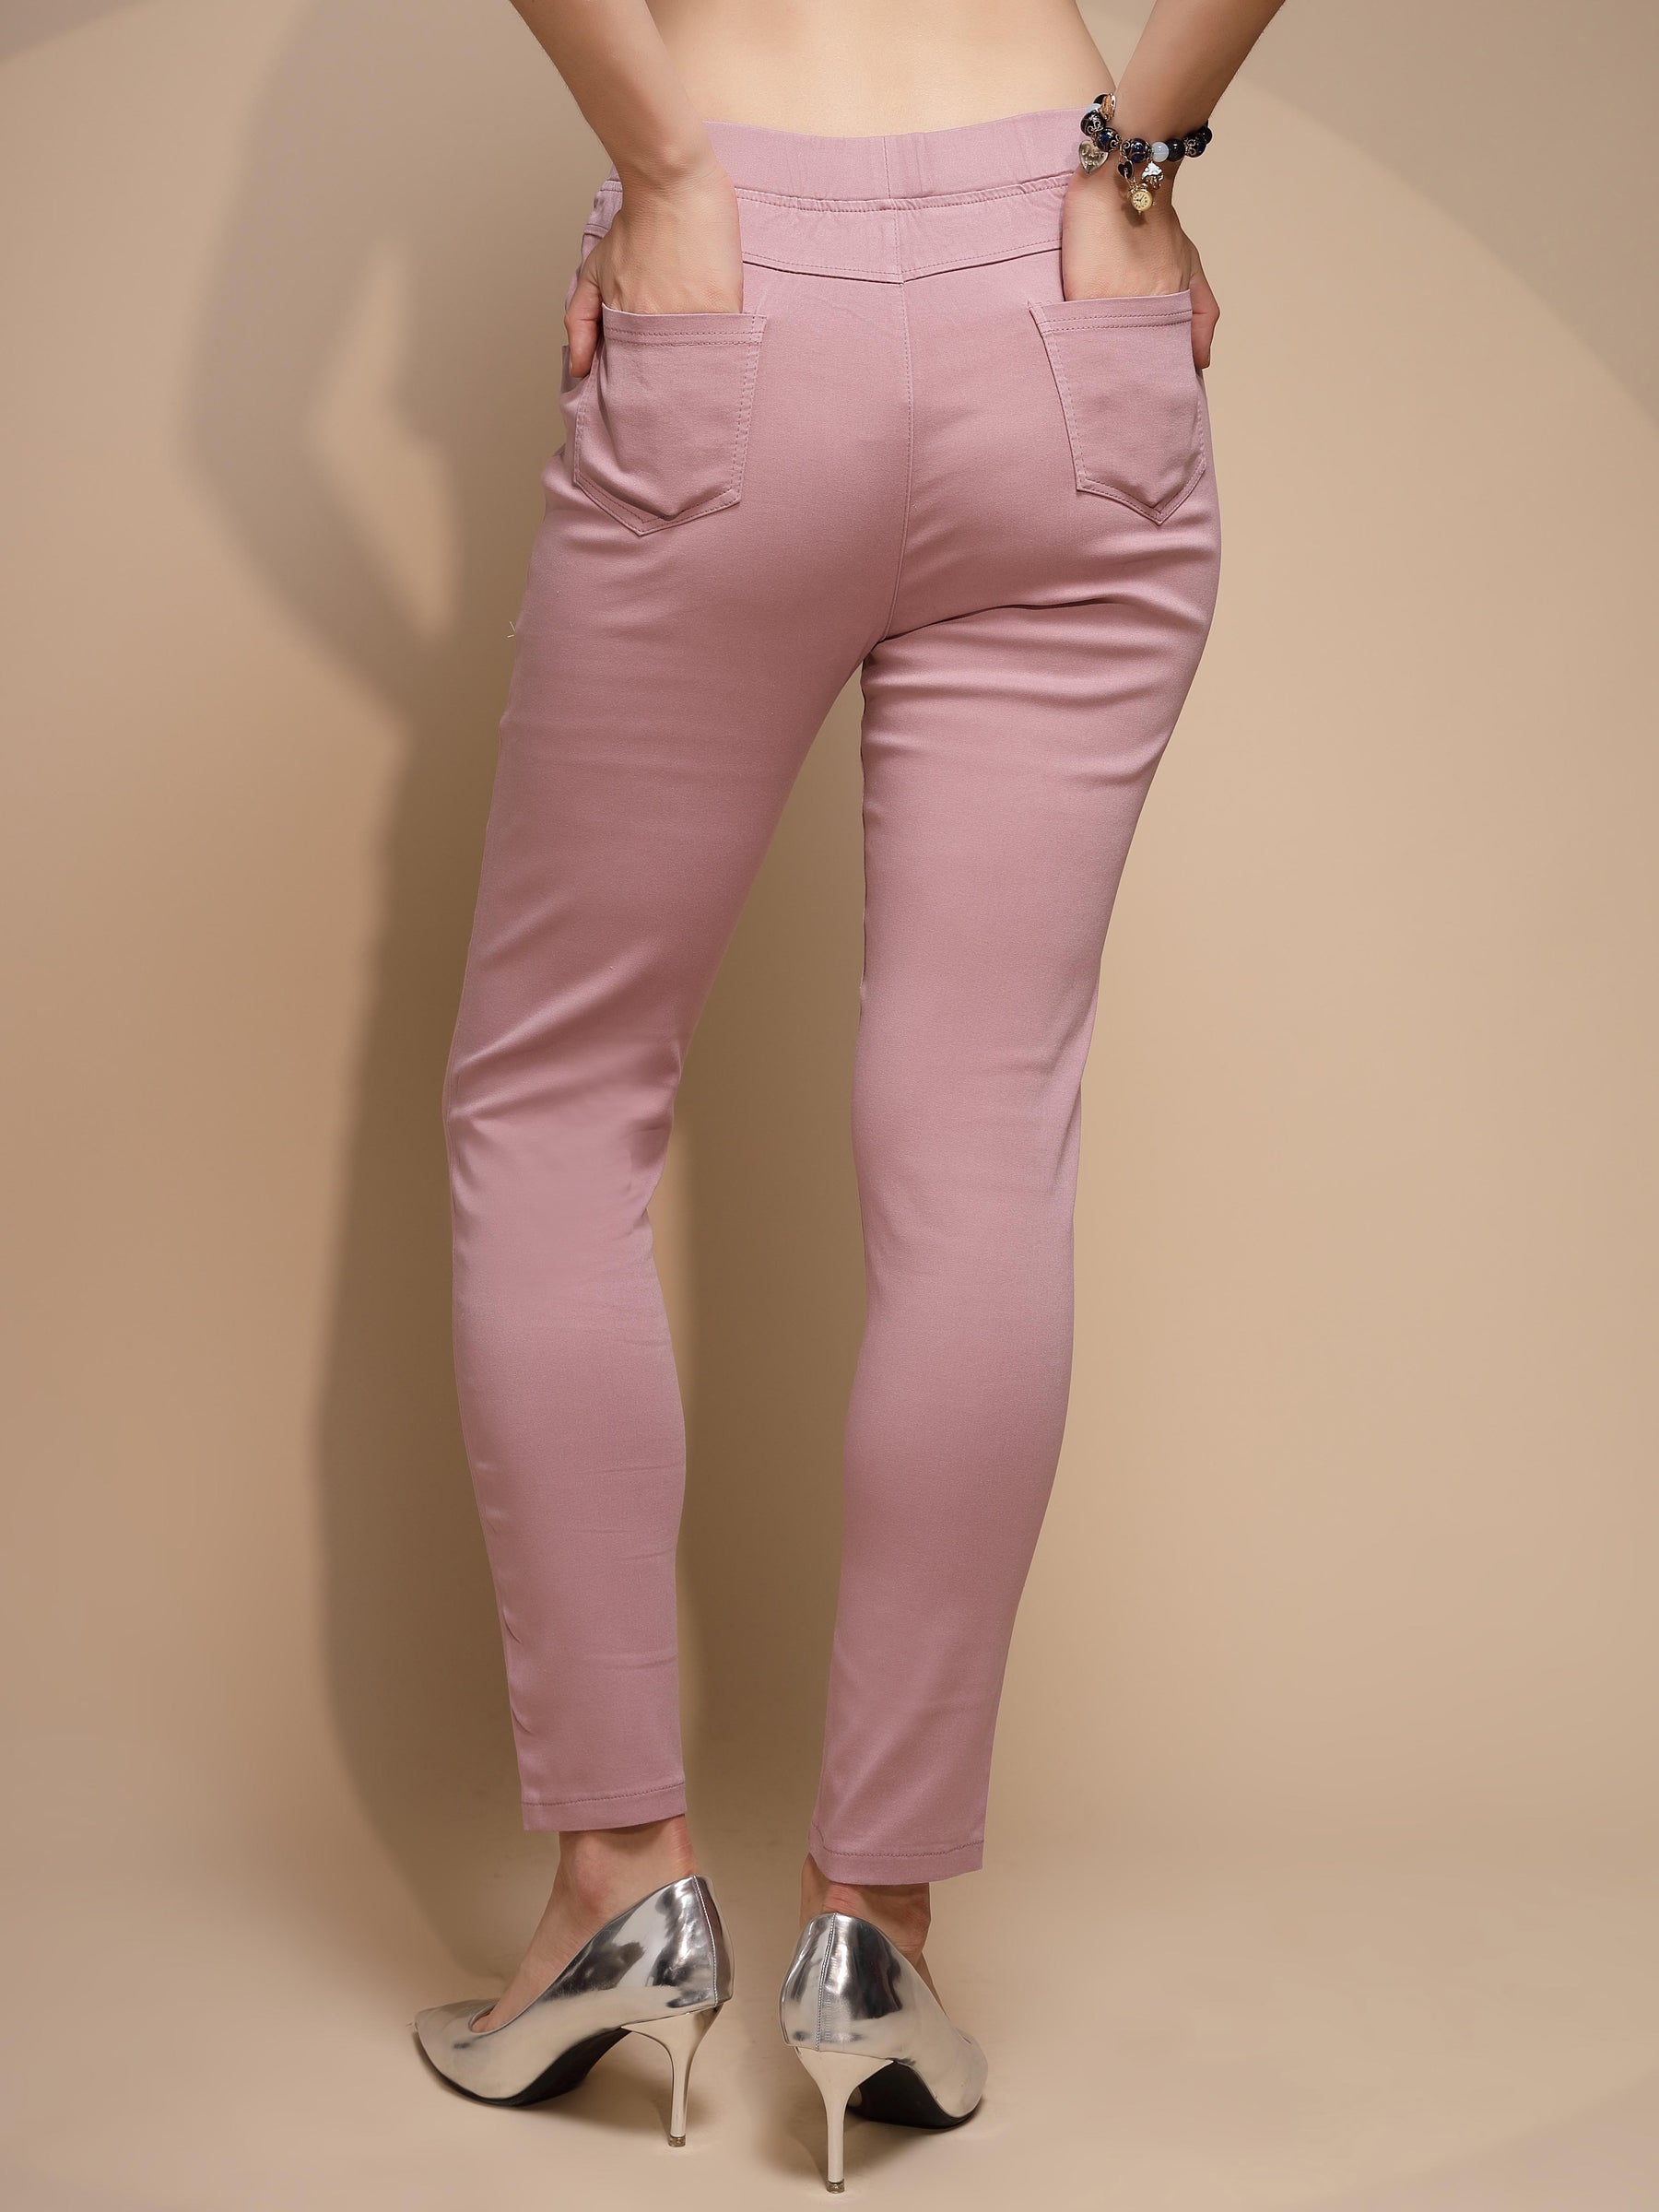 Buy angel Women's cotton Lyra cigar pants (pink) (Pink, L) at Amazon.in